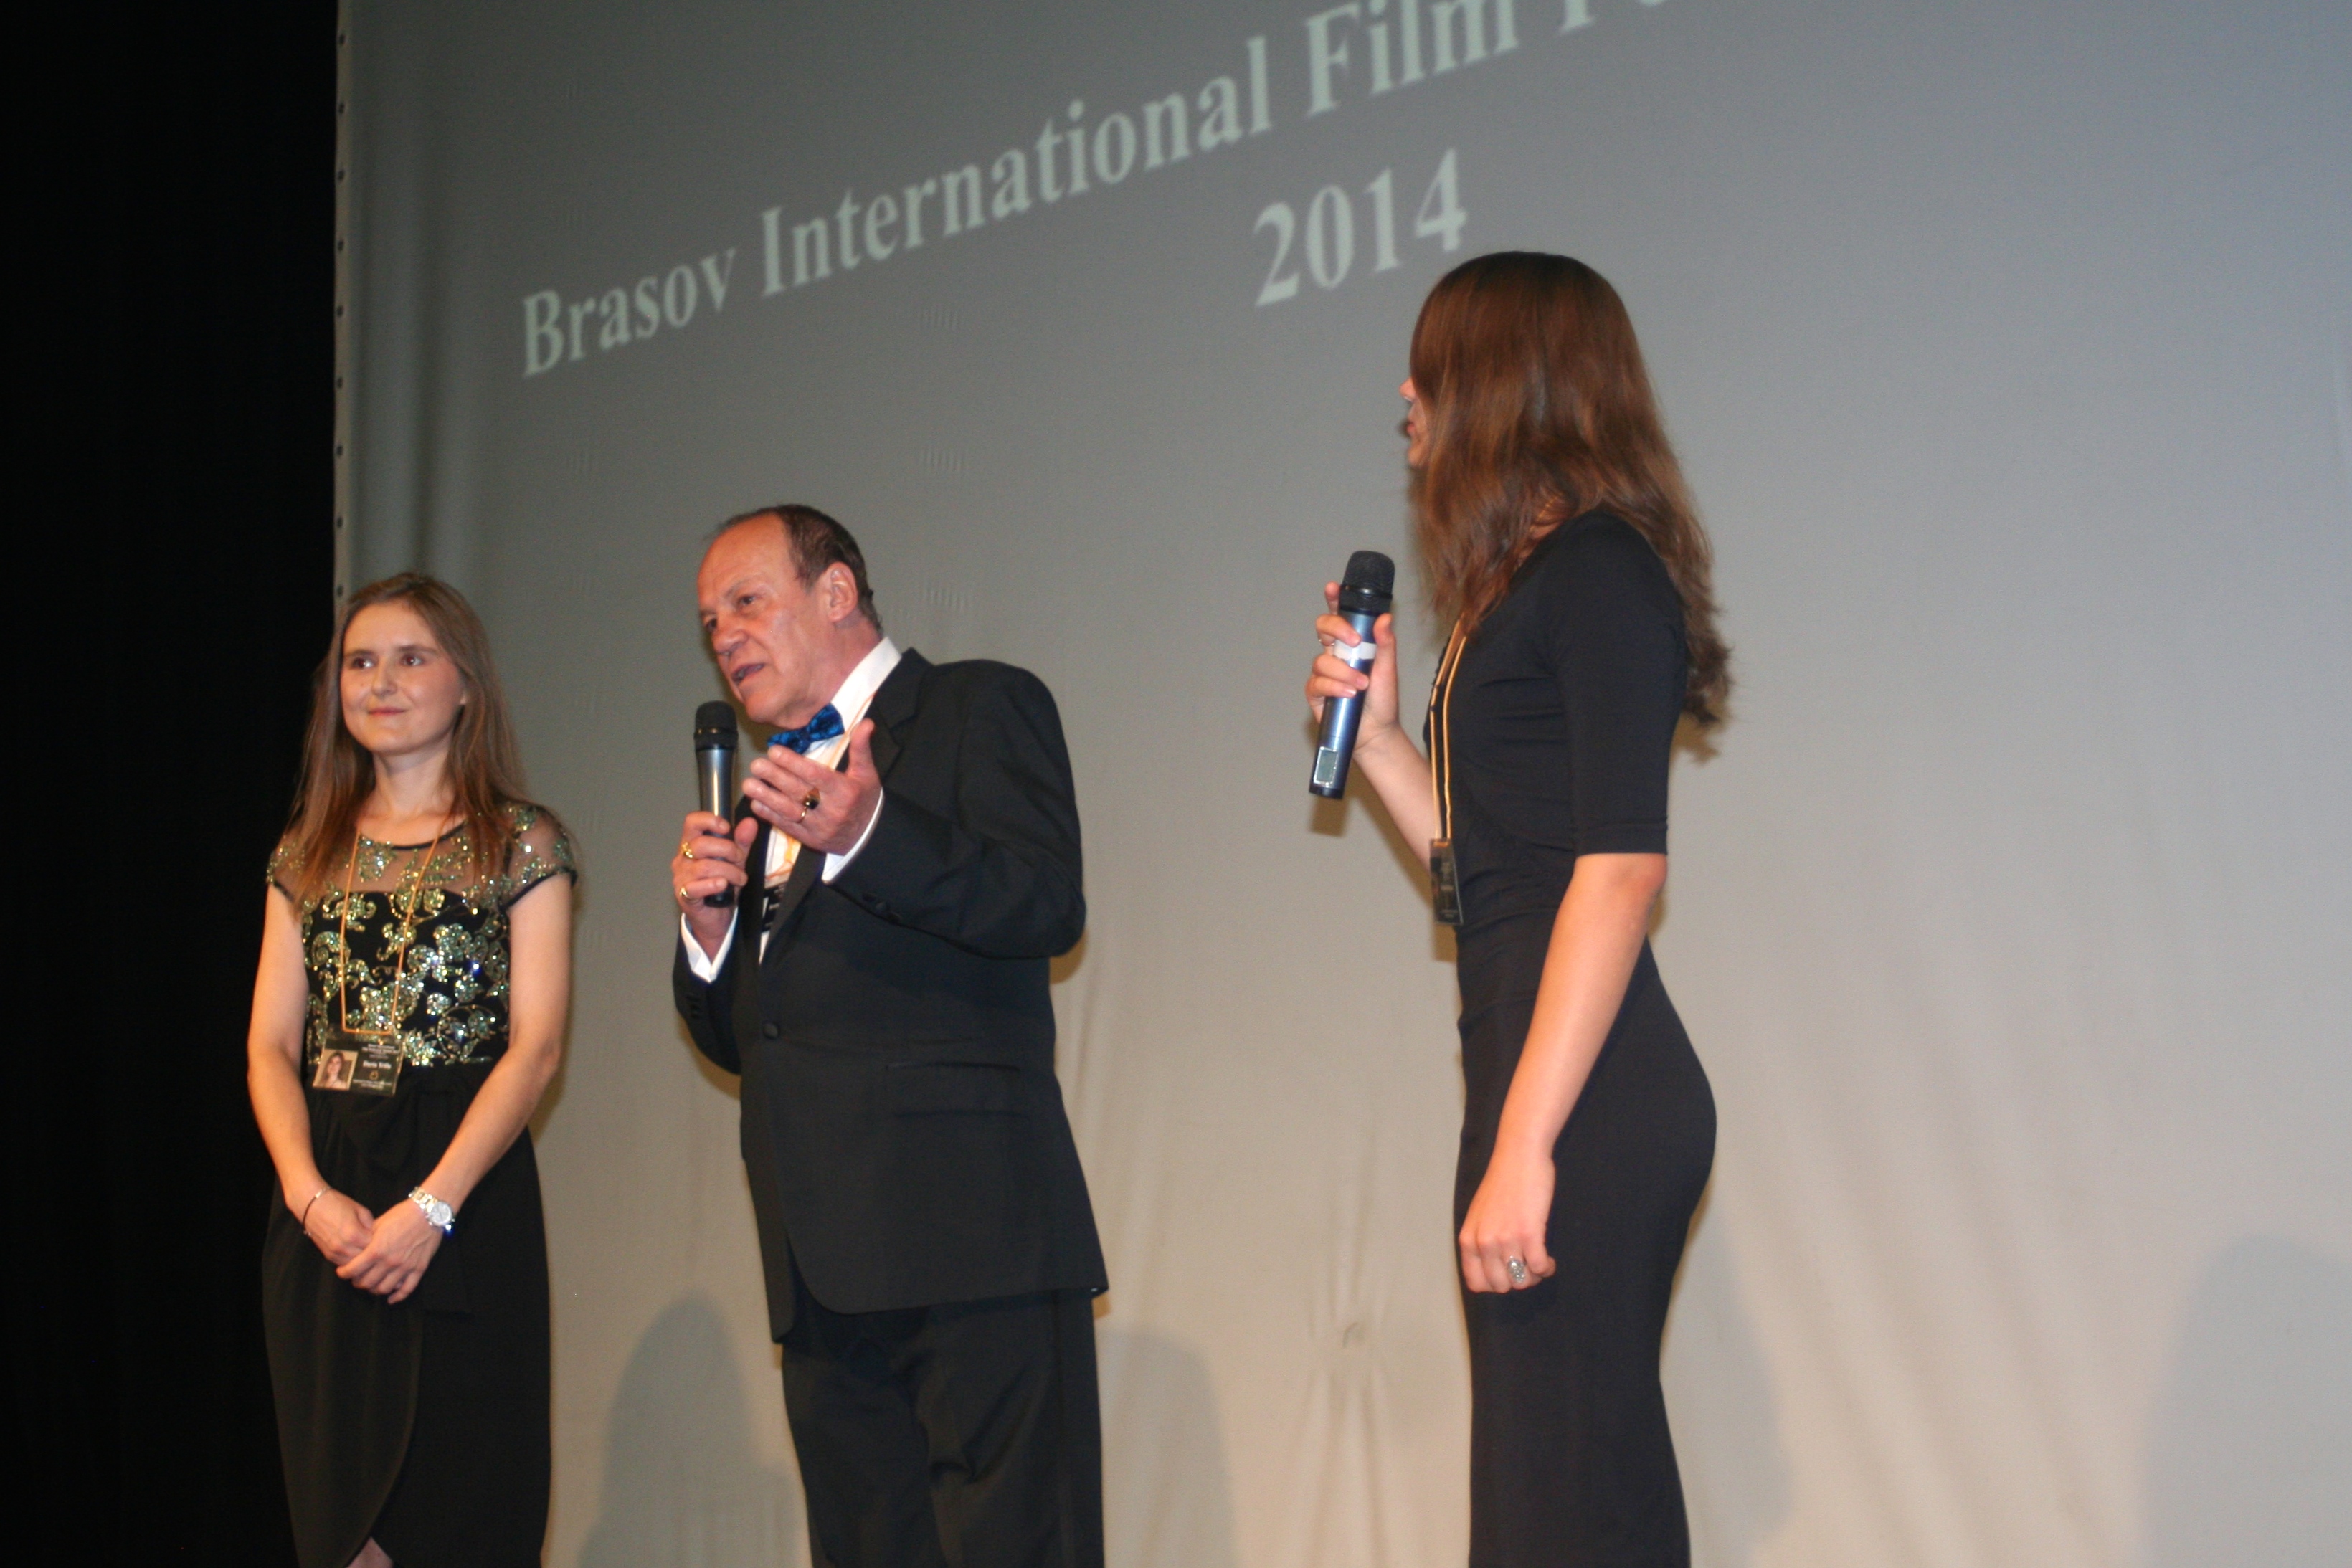 Producer & Festival Director Daria Trifu, Bruno Pischiutta and Actress Denisa Barvon present the 2014 edition of Brasov International Film Festival & Market 2014 (www.brasovfilmfestival.com) in Brasov, Romania